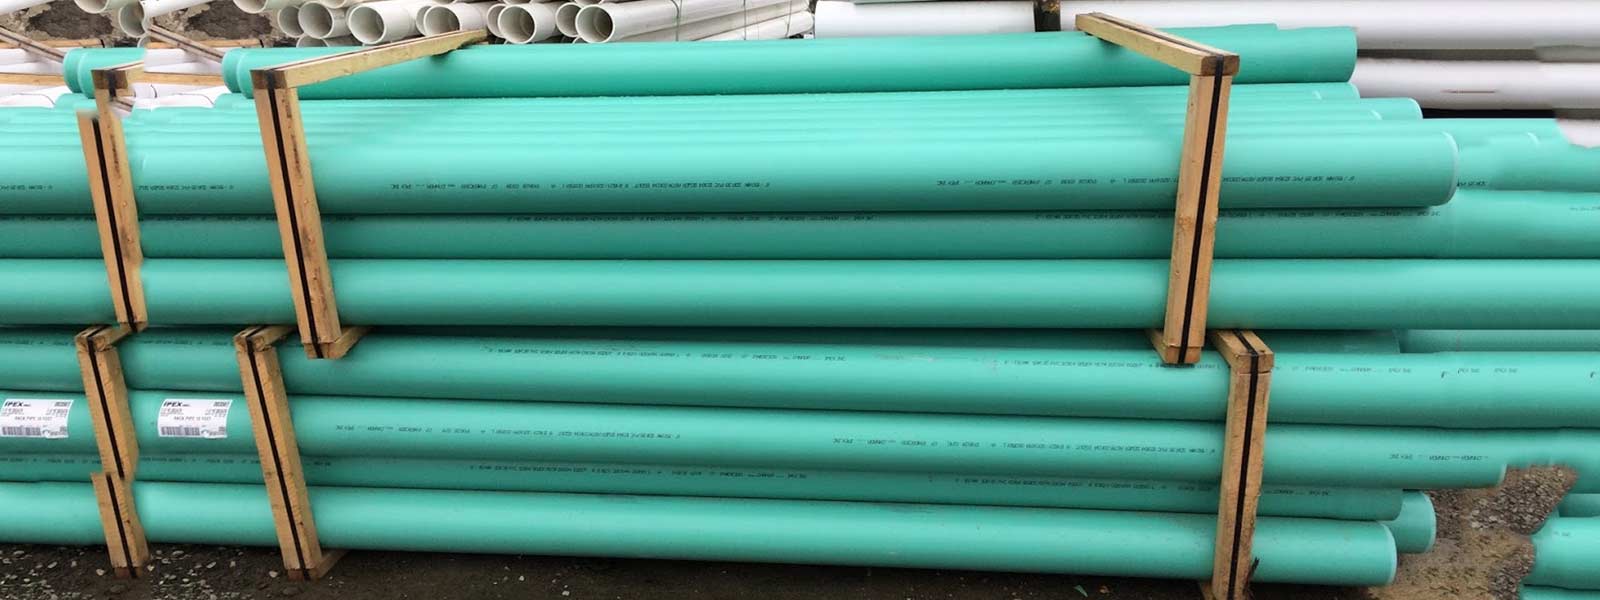 Kong PVC Pipes | PVC Piping Norwalk | PVC Pipes Westport